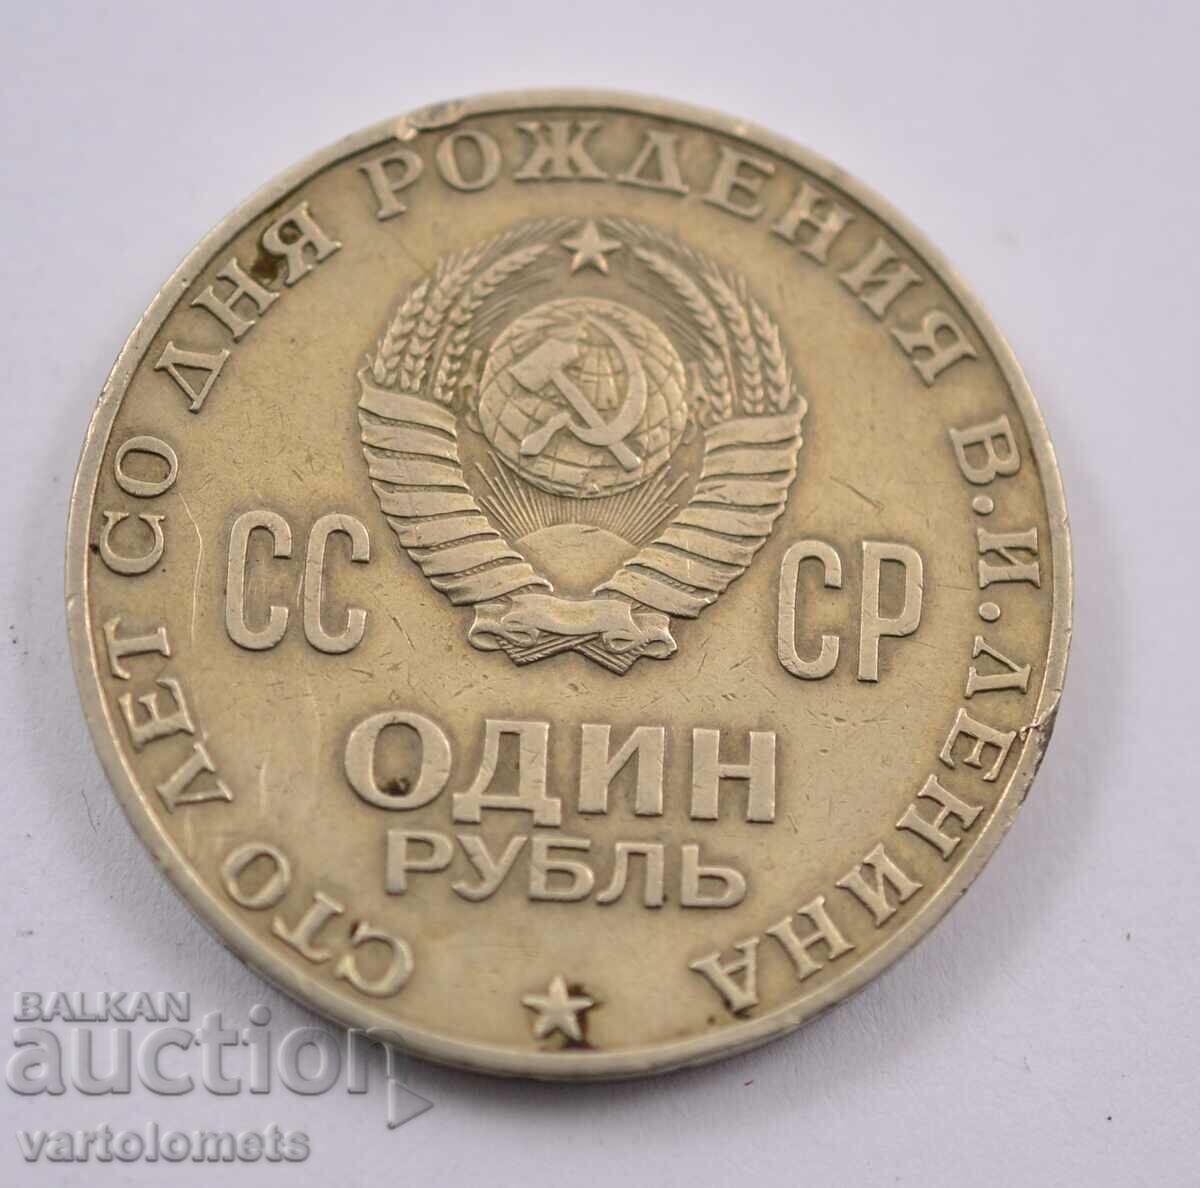 1 ruble, 1970 - USSR 100 years since the birth of Vladimir Lenin